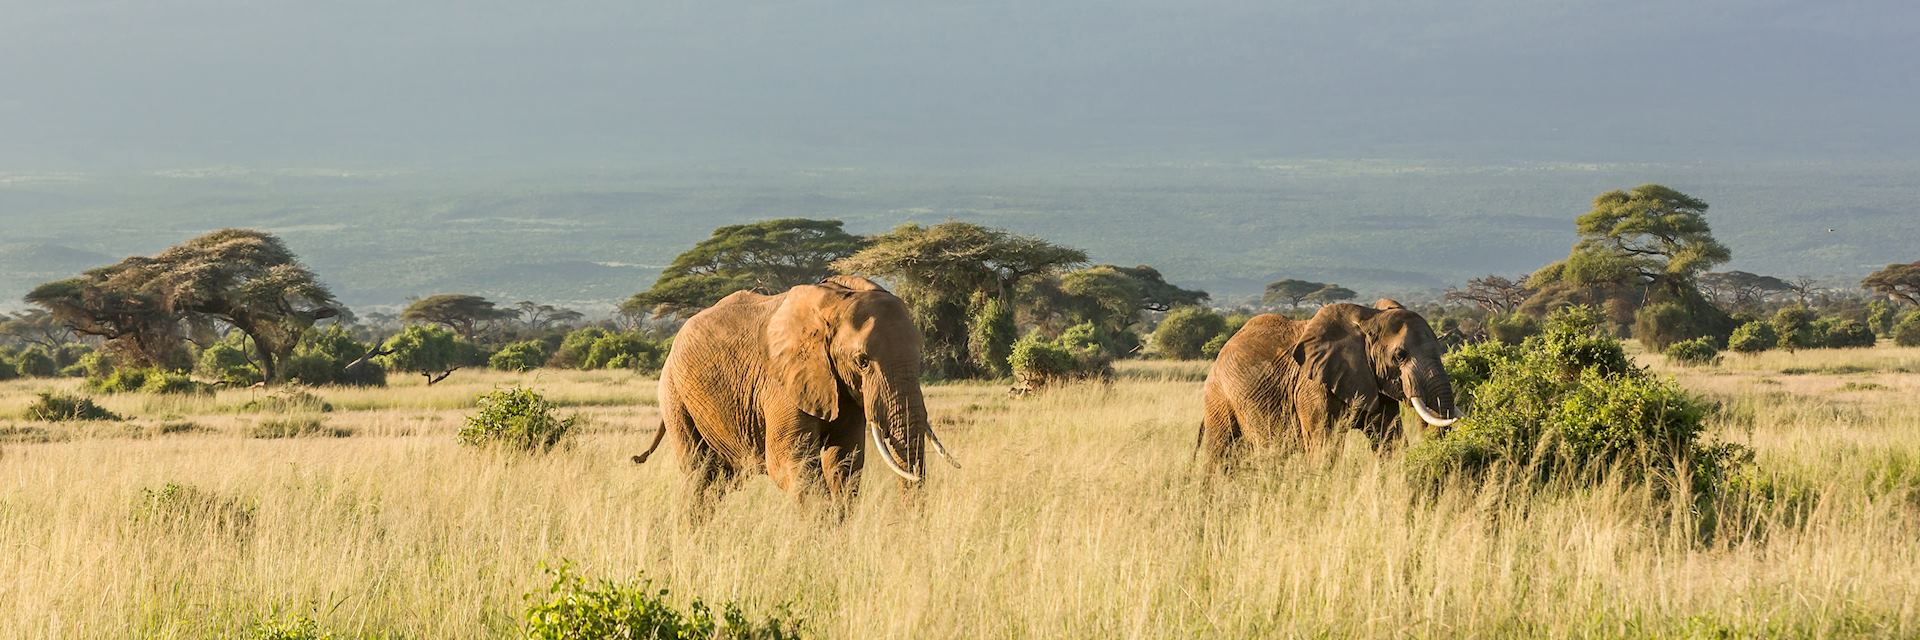 Elephant near Mt Kilimanjaro